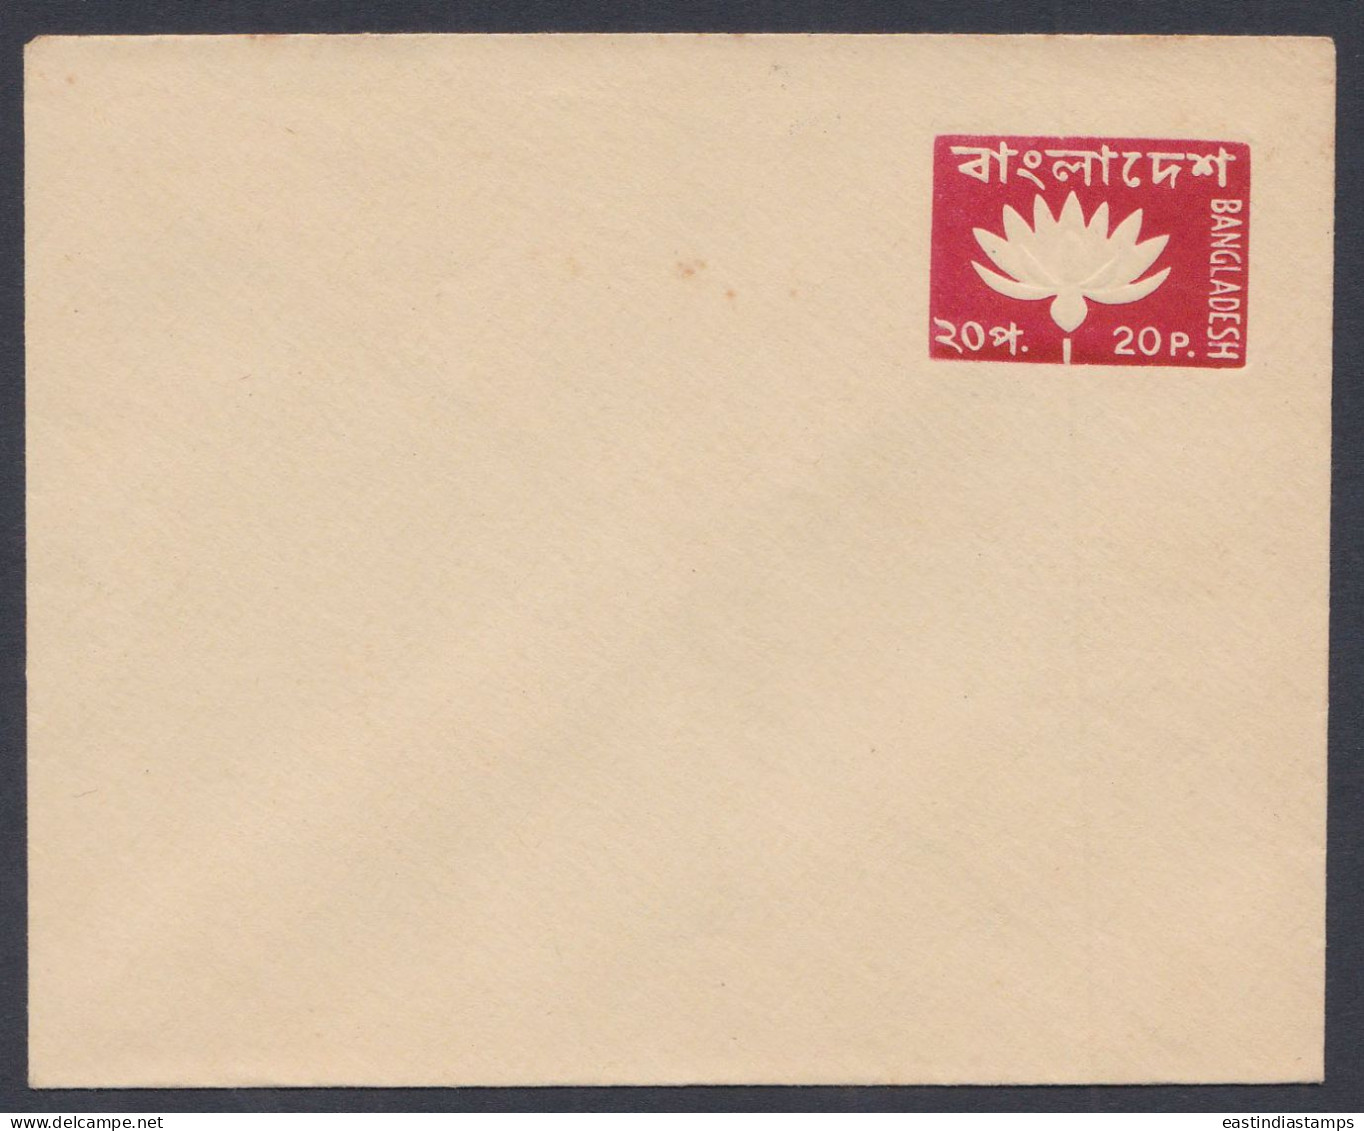 Bangladesh 20 Paisa Mint Postal Envelope, Cover, Postal Stationery - Bangladesh